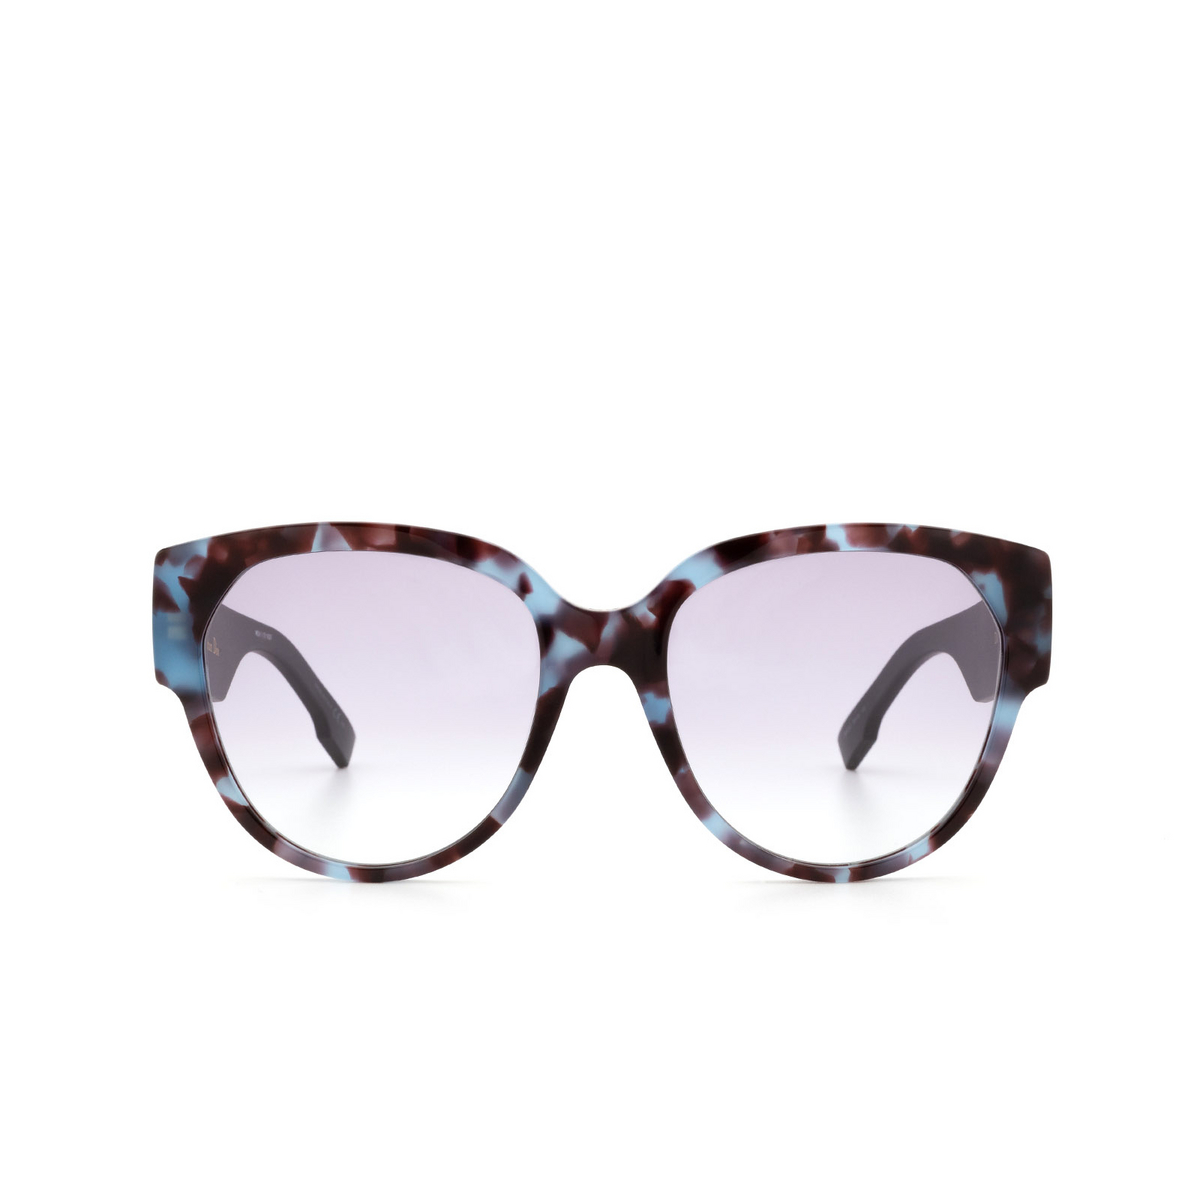 Dior DIORID2 Sunglasses JBW/SO Blue Havana - front view